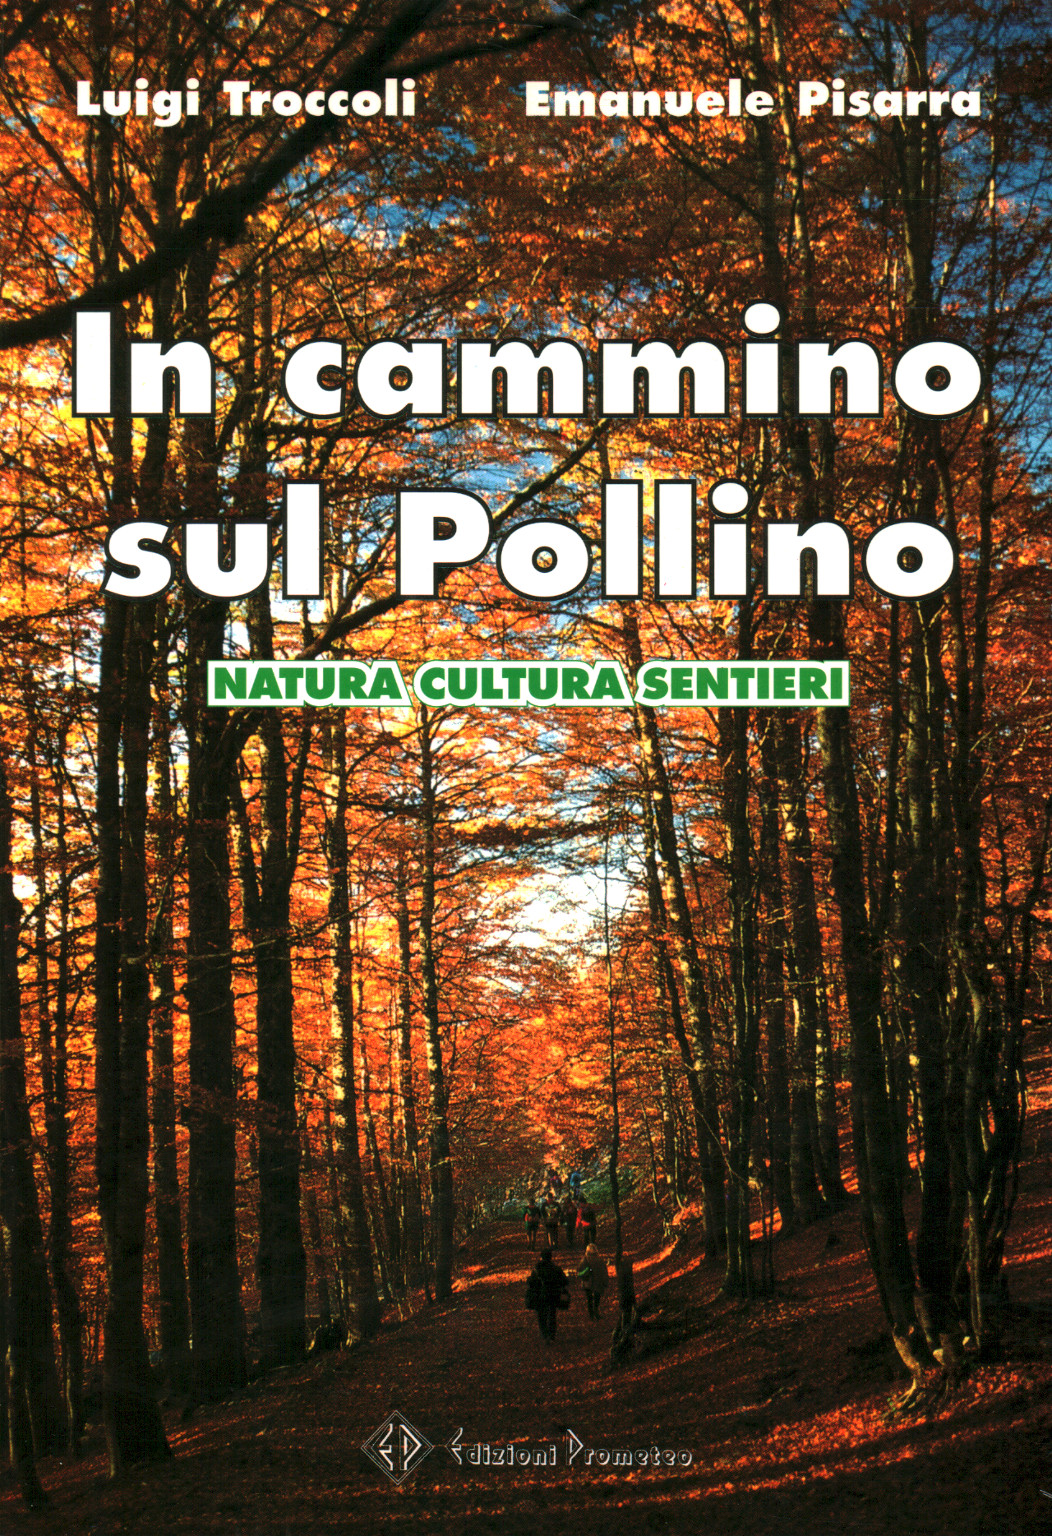 Wandern auf dem Pollino, s.a.